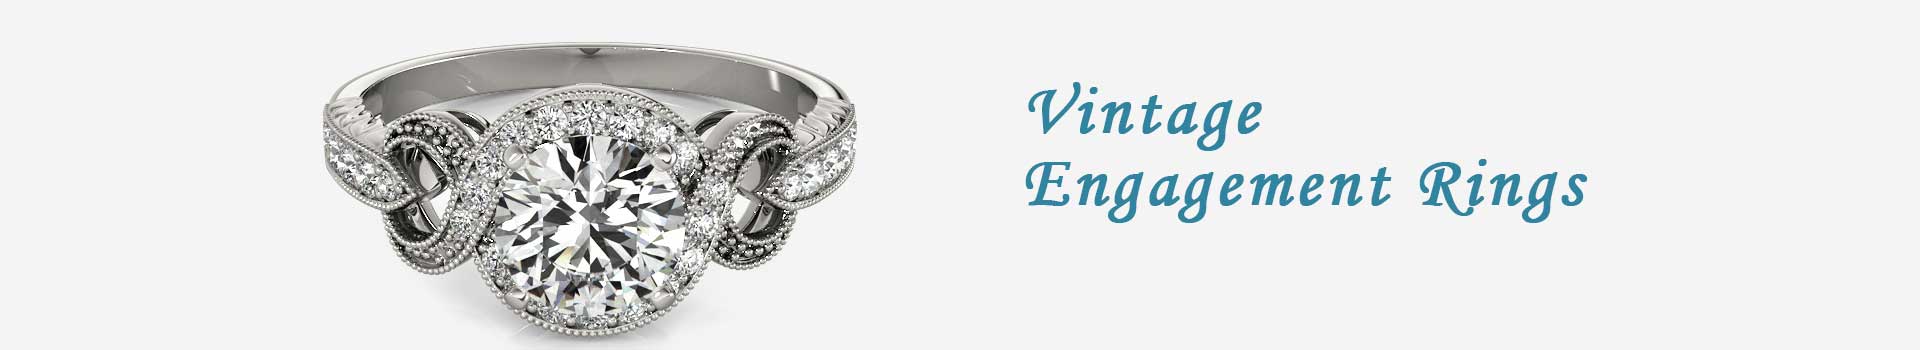 Vintage Engagement Rings 